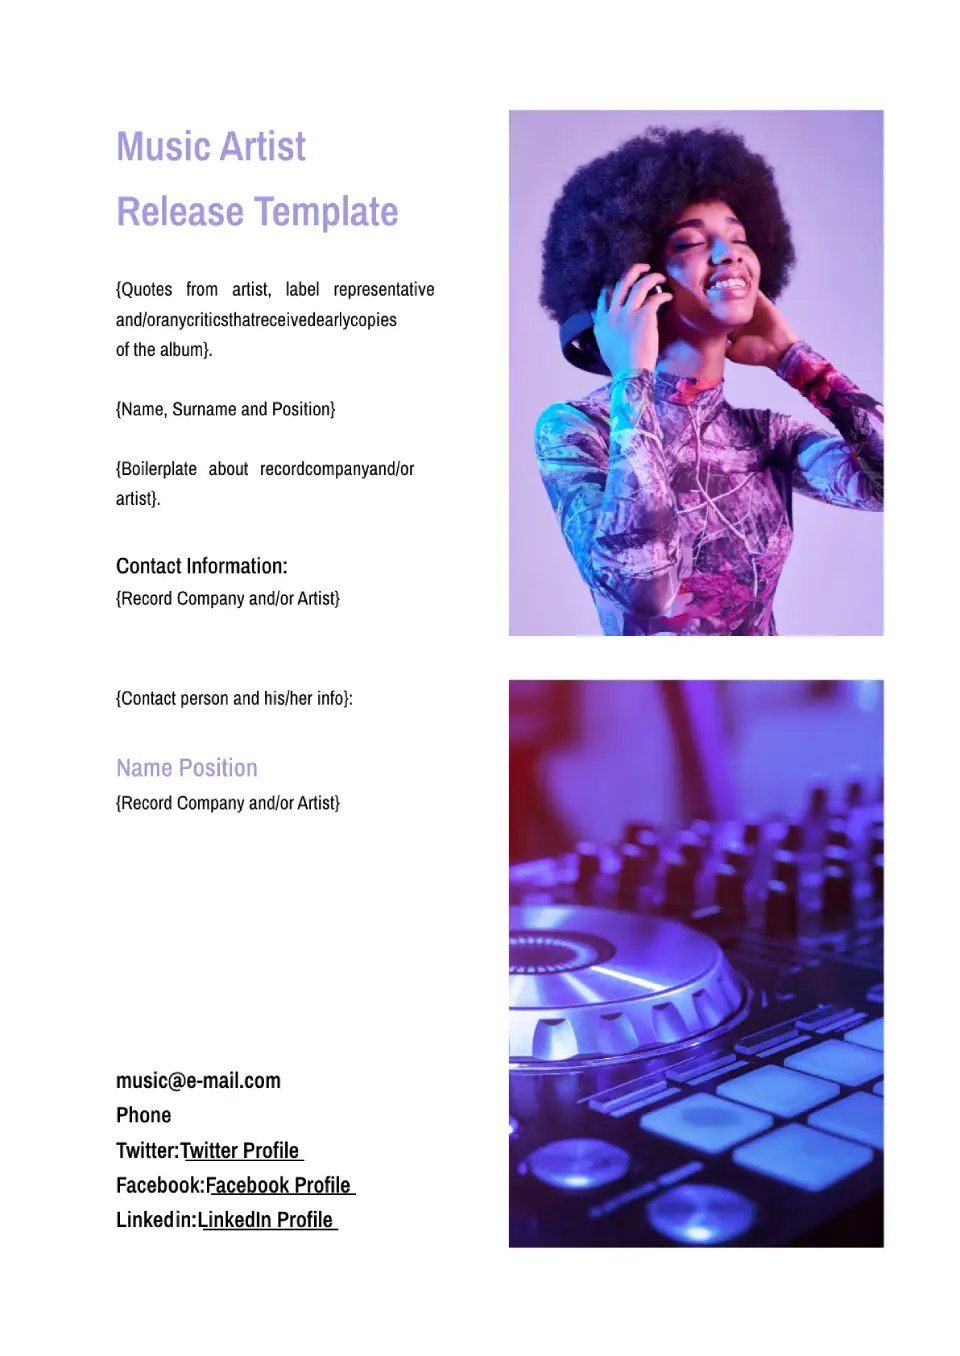 Music Artist Press Release for Google Docs